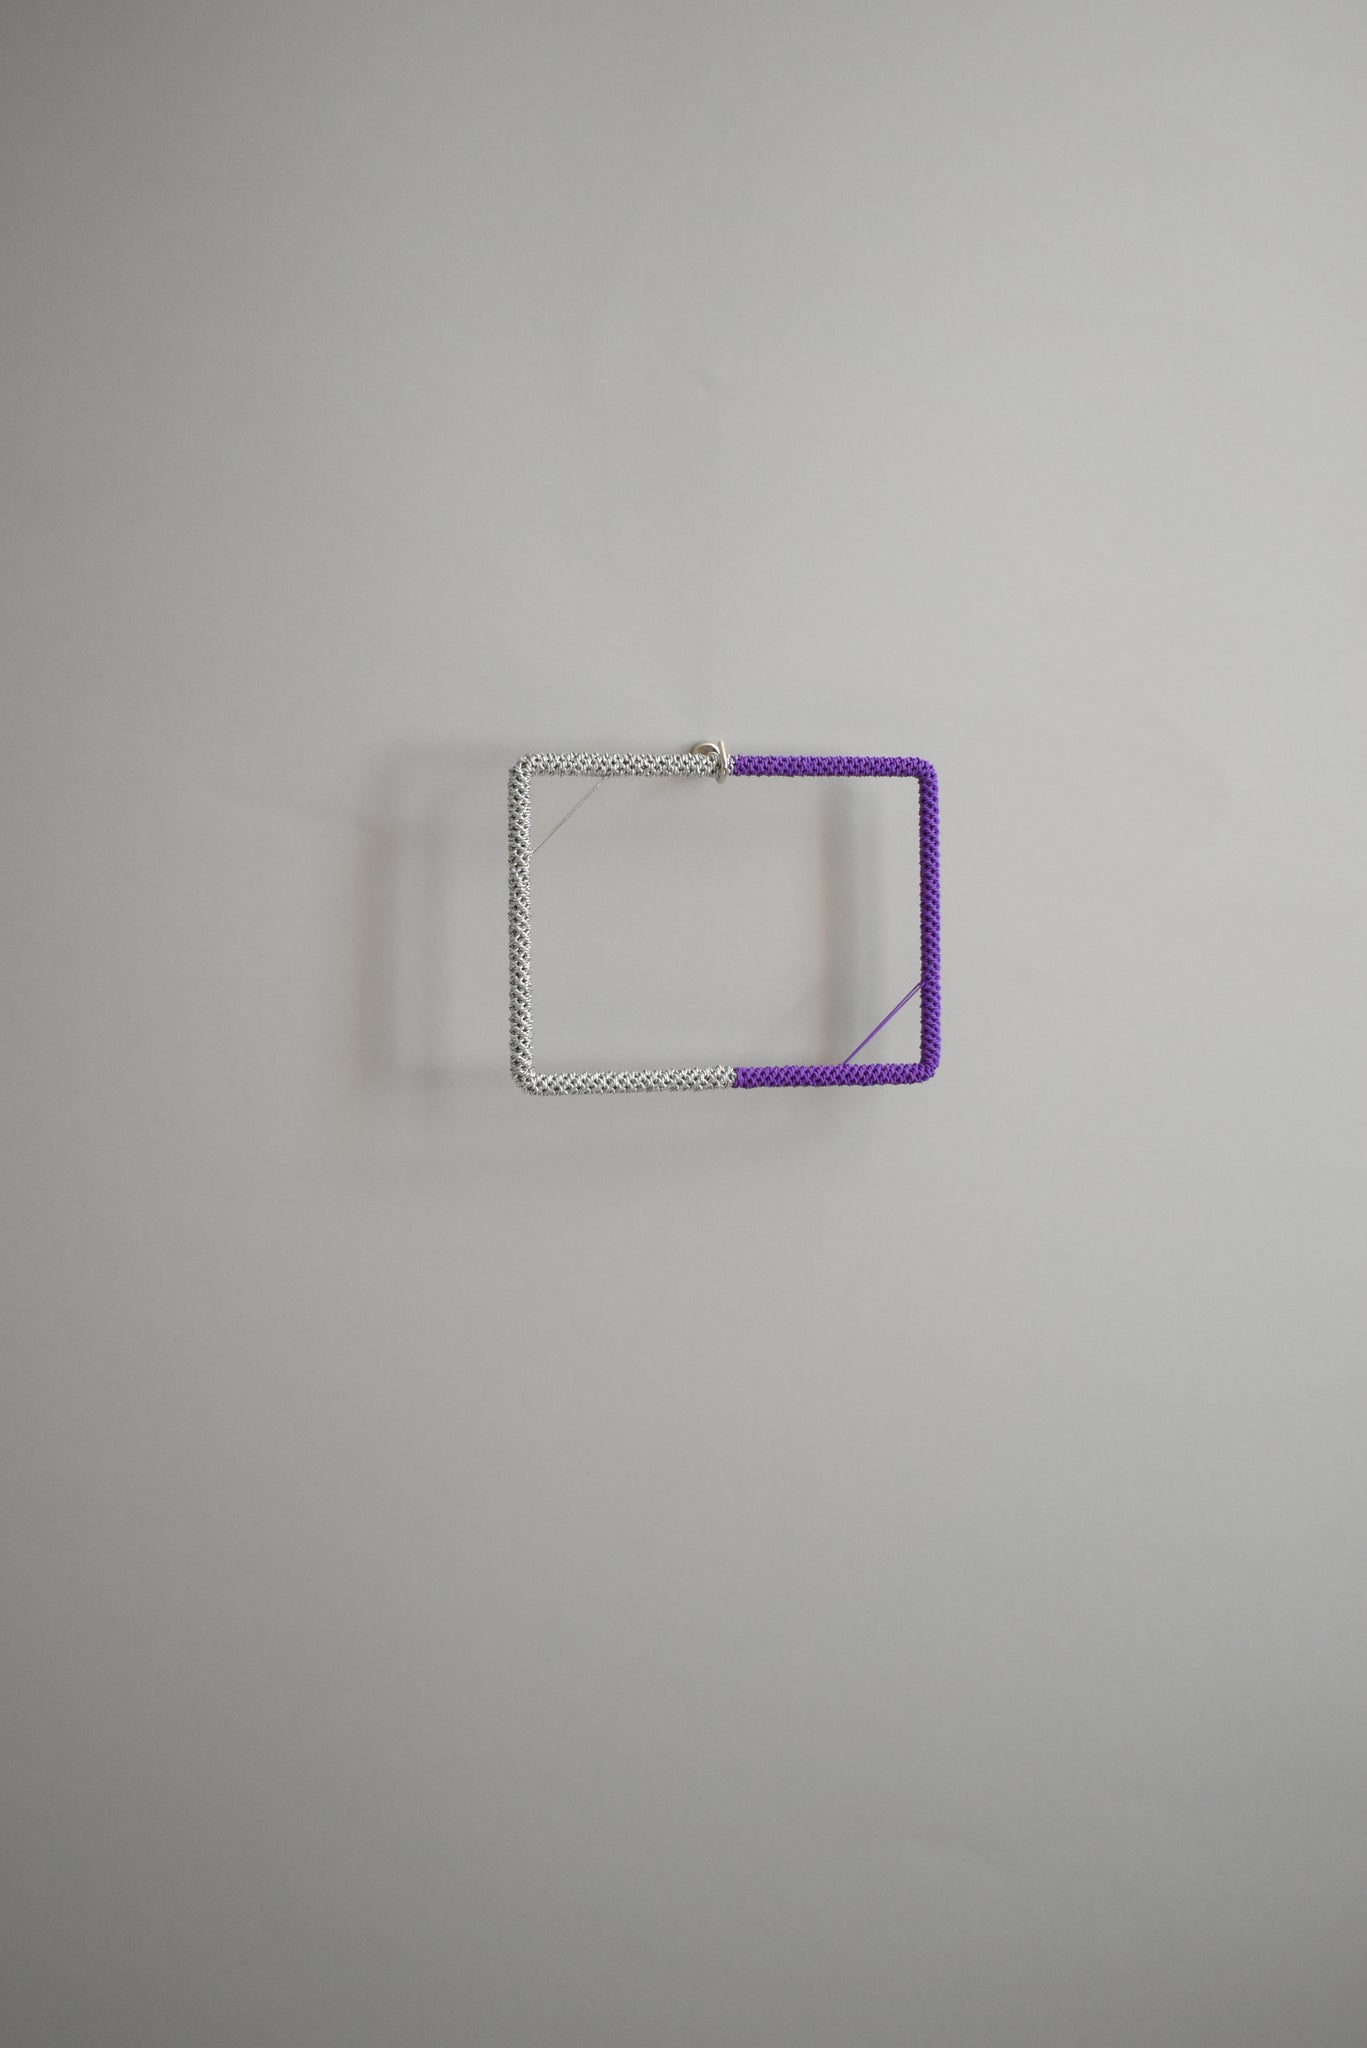 FRAME / A6 / silver × purple